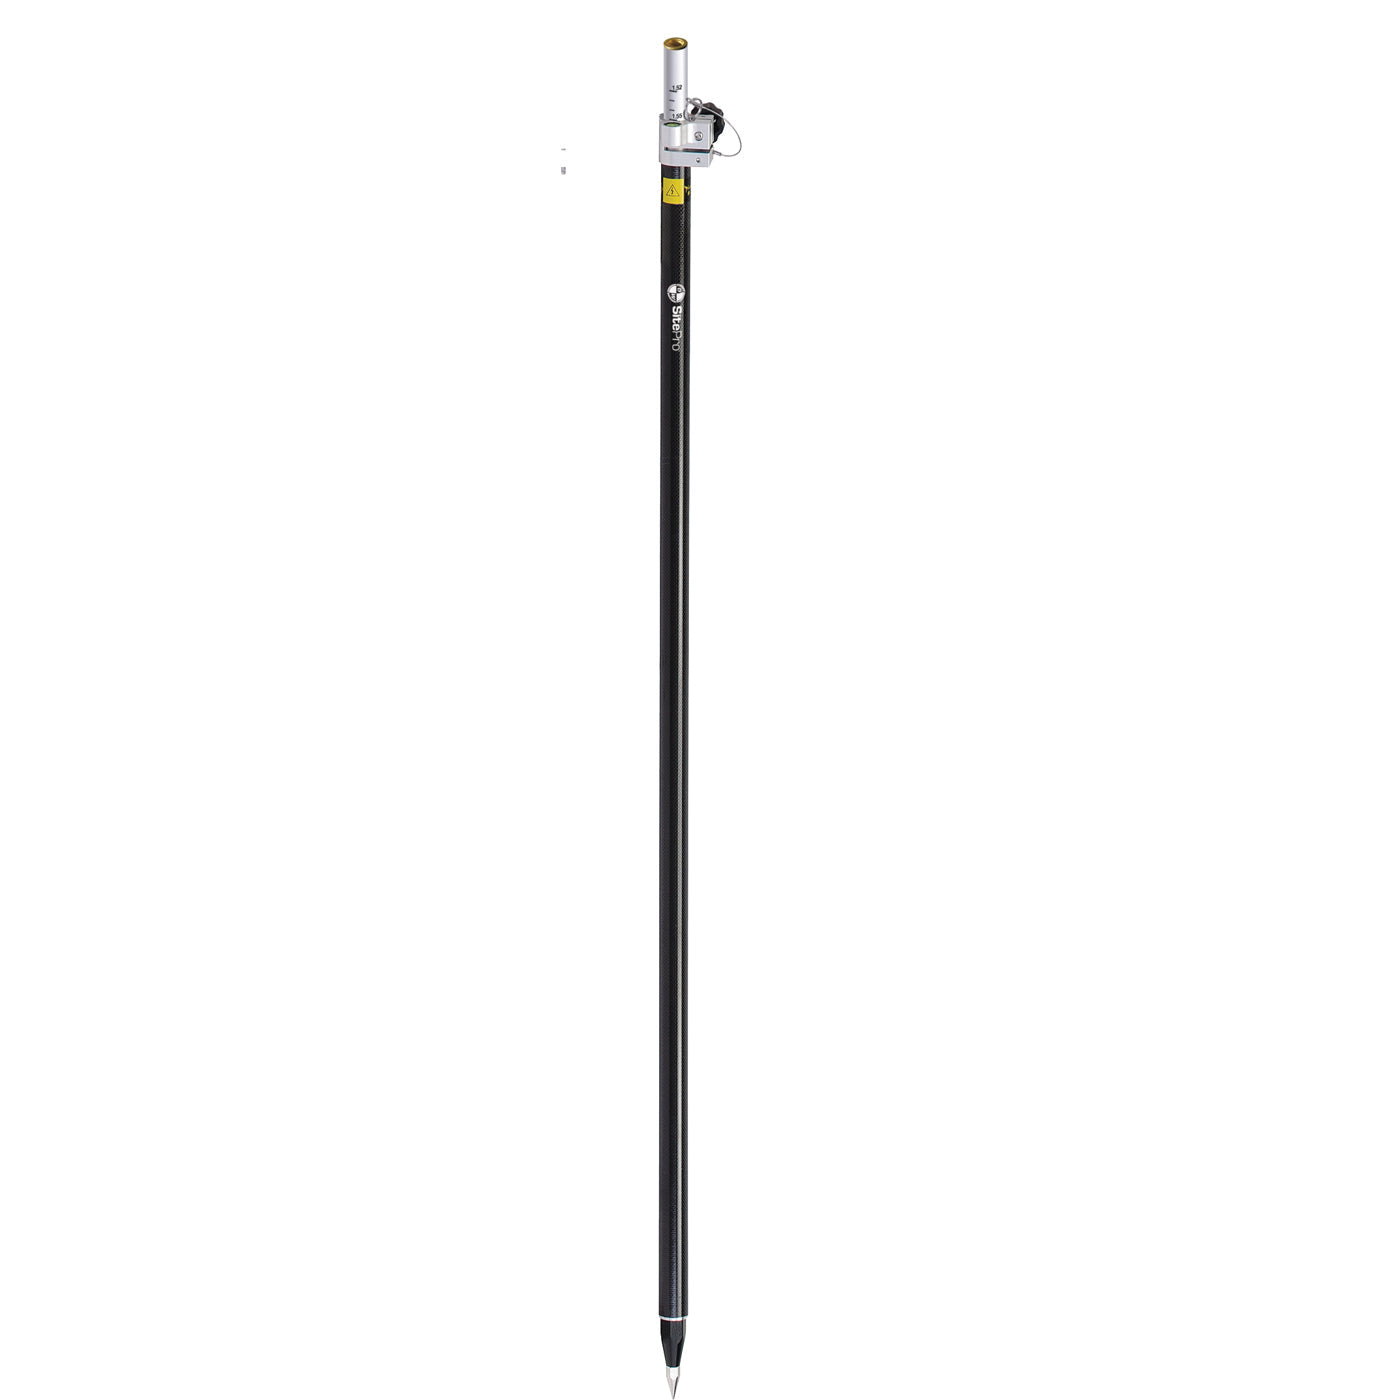 SitePro 07-4626-TM 2.6m Carbon Fiber Prism Pole w/ Locking Pin